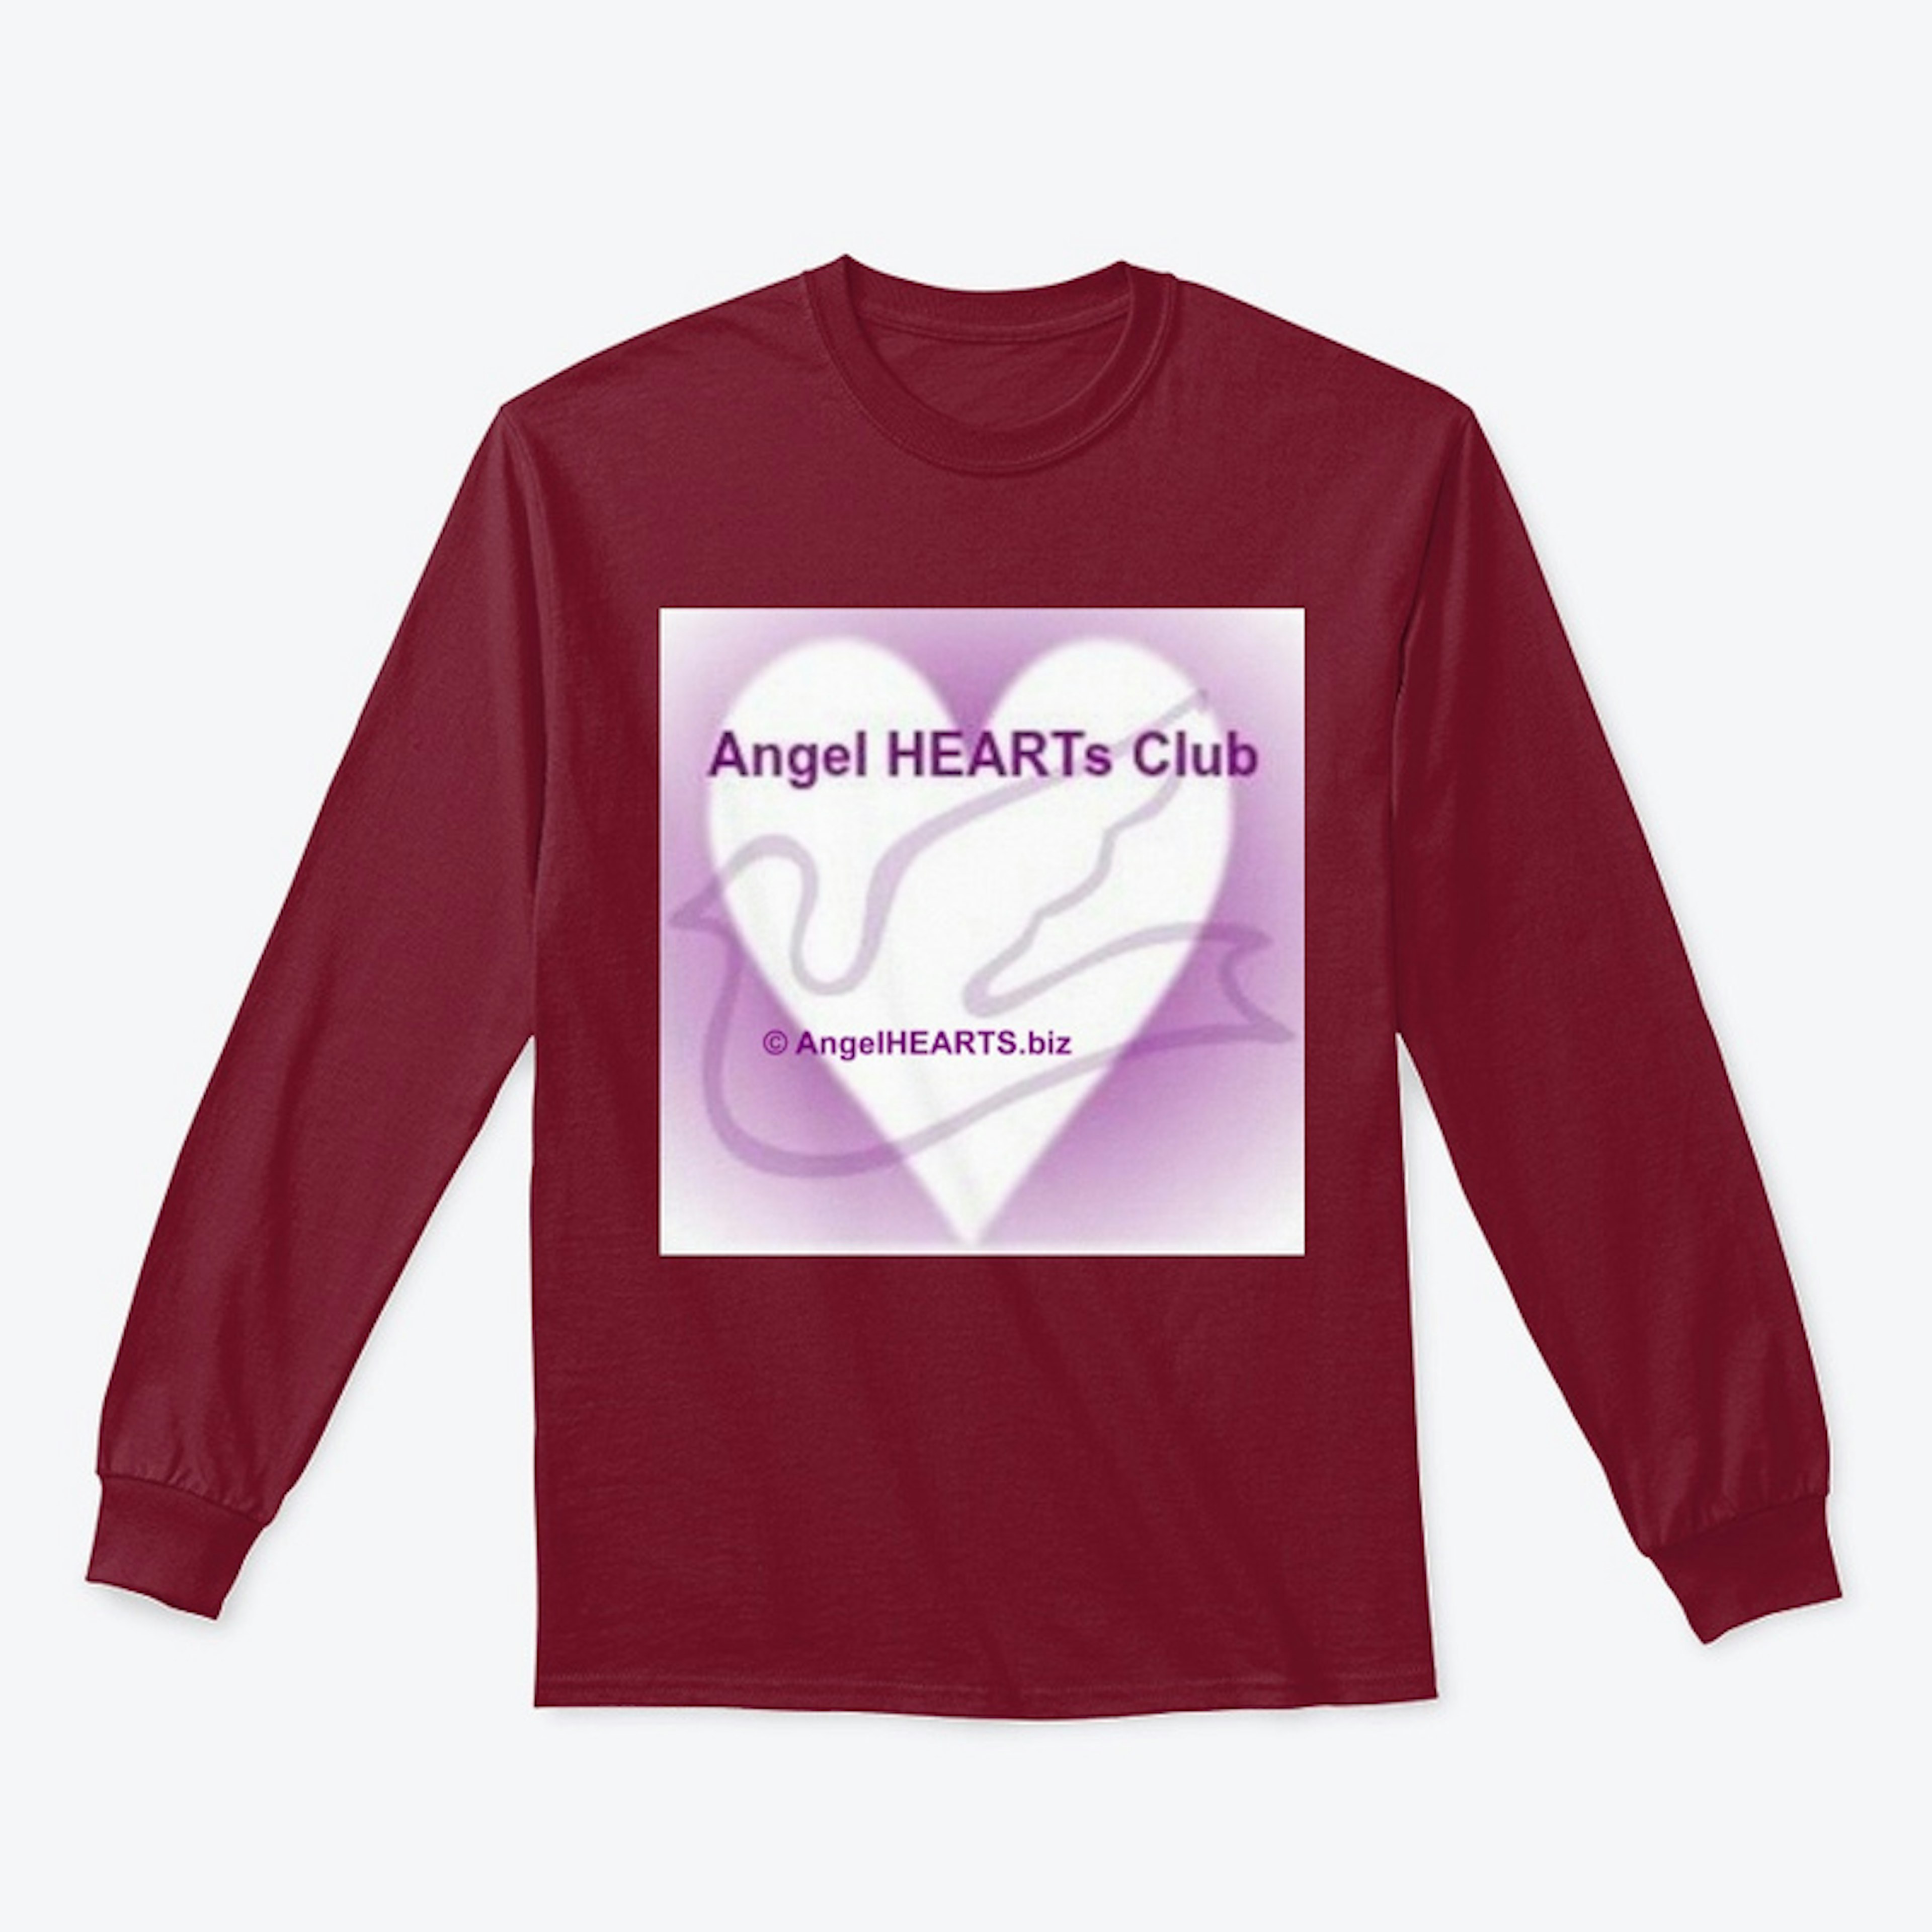 Angel HEARTs Club